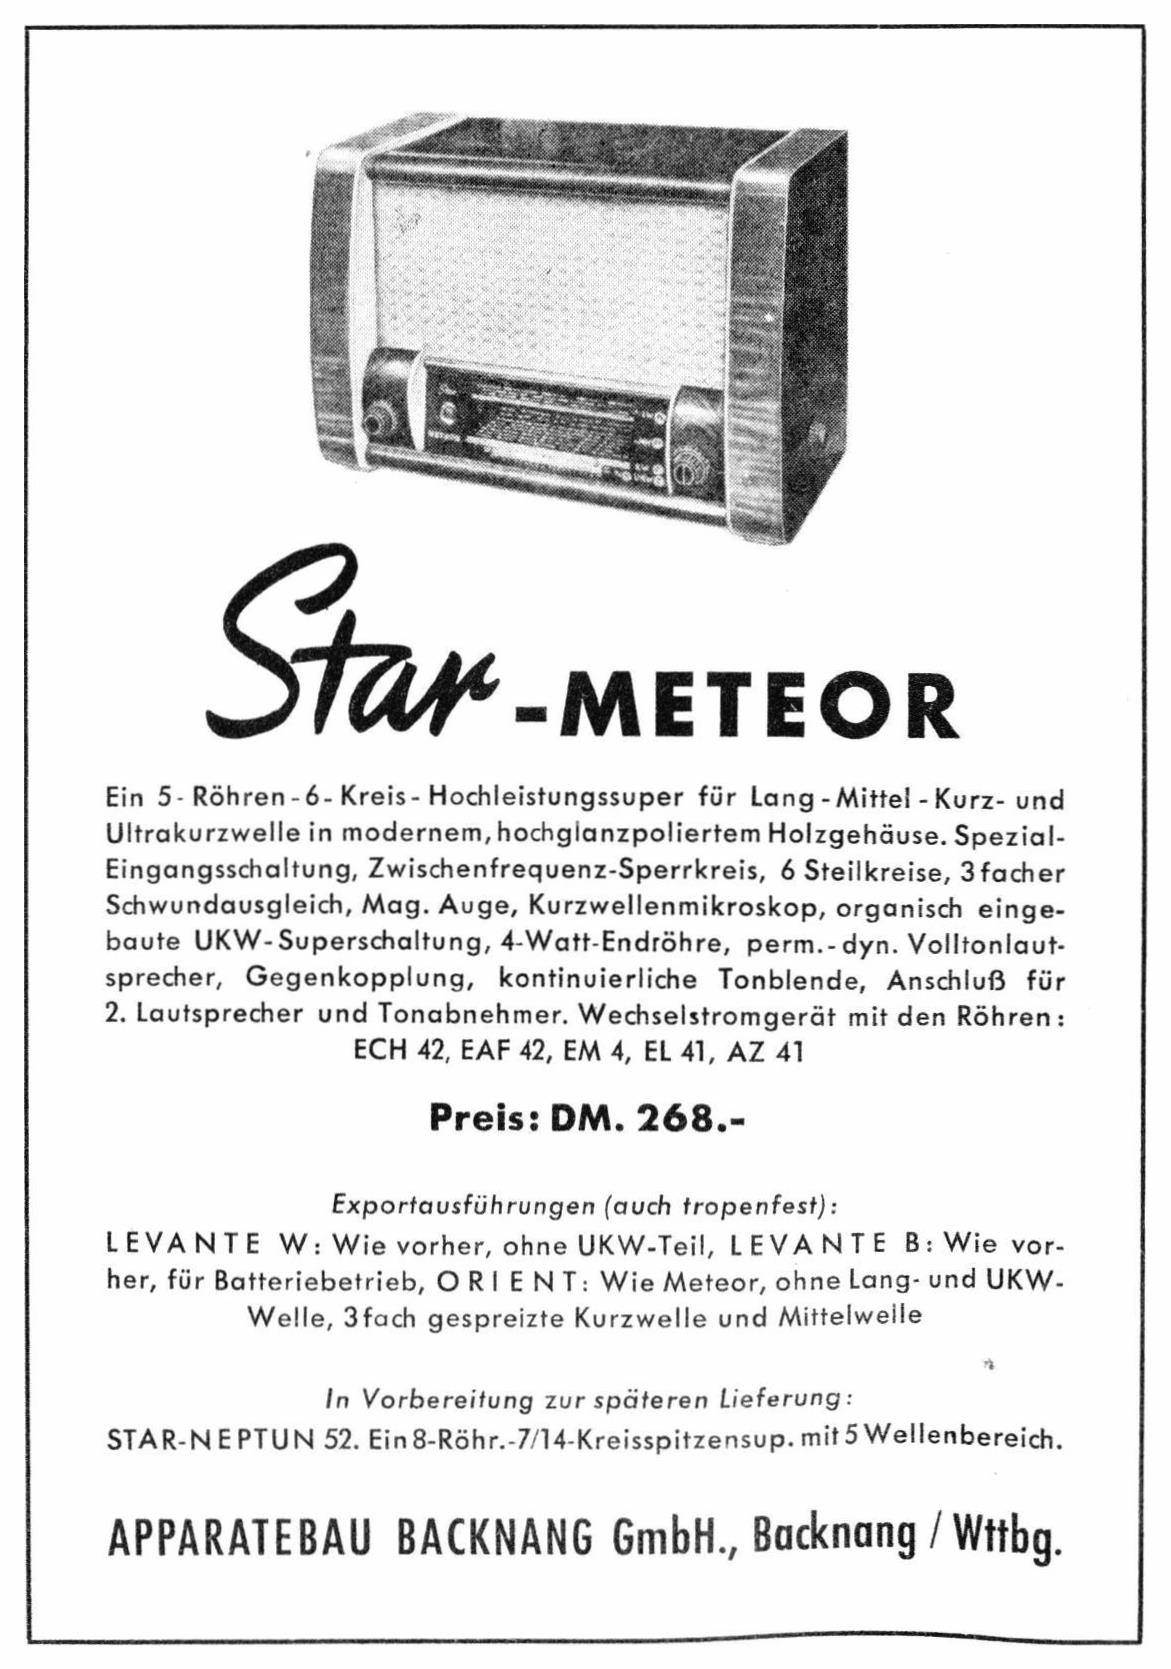 Star 1951 0.jpg